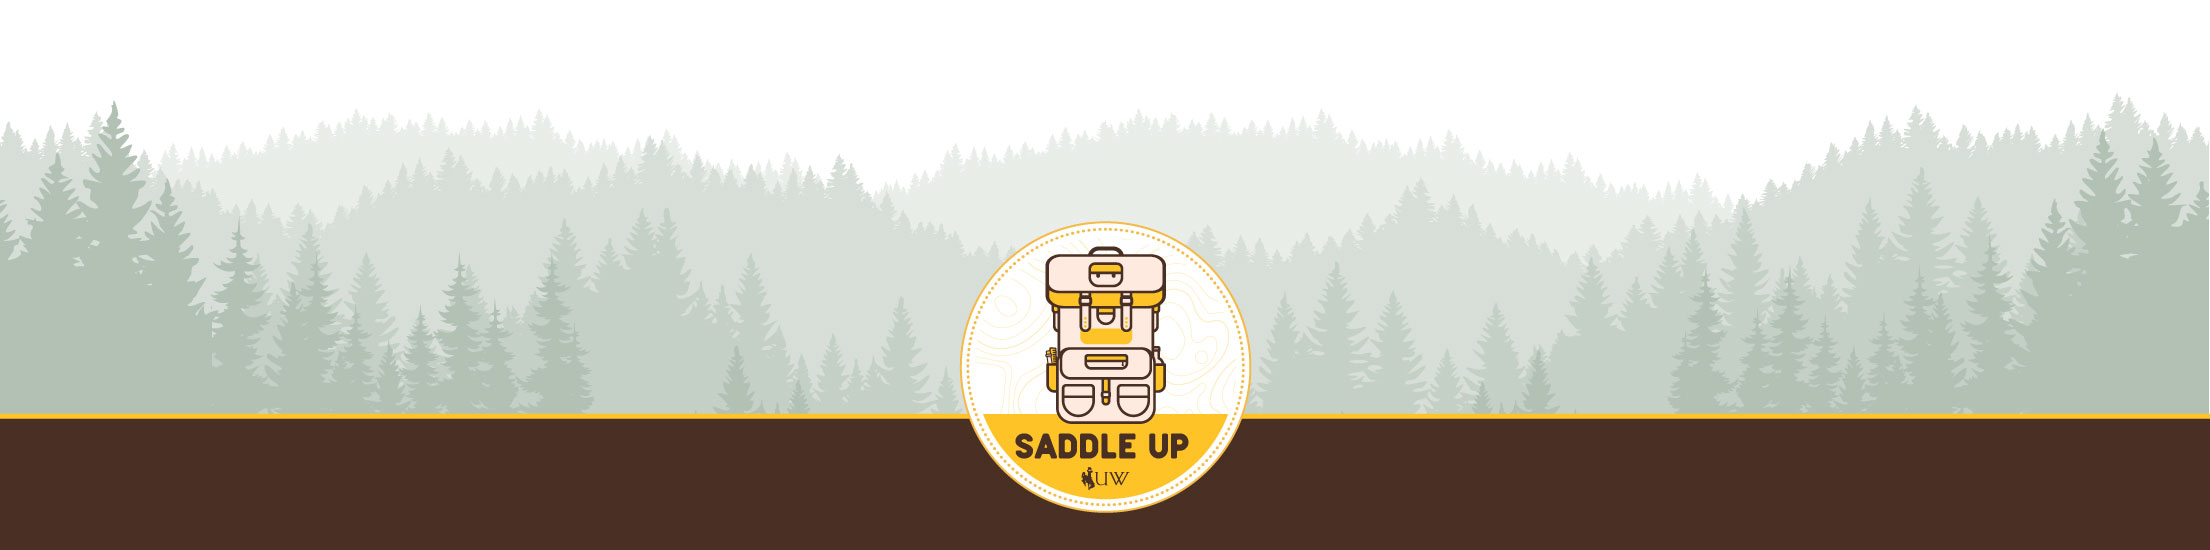 Saddle Up logo on a green mountain illustrated background